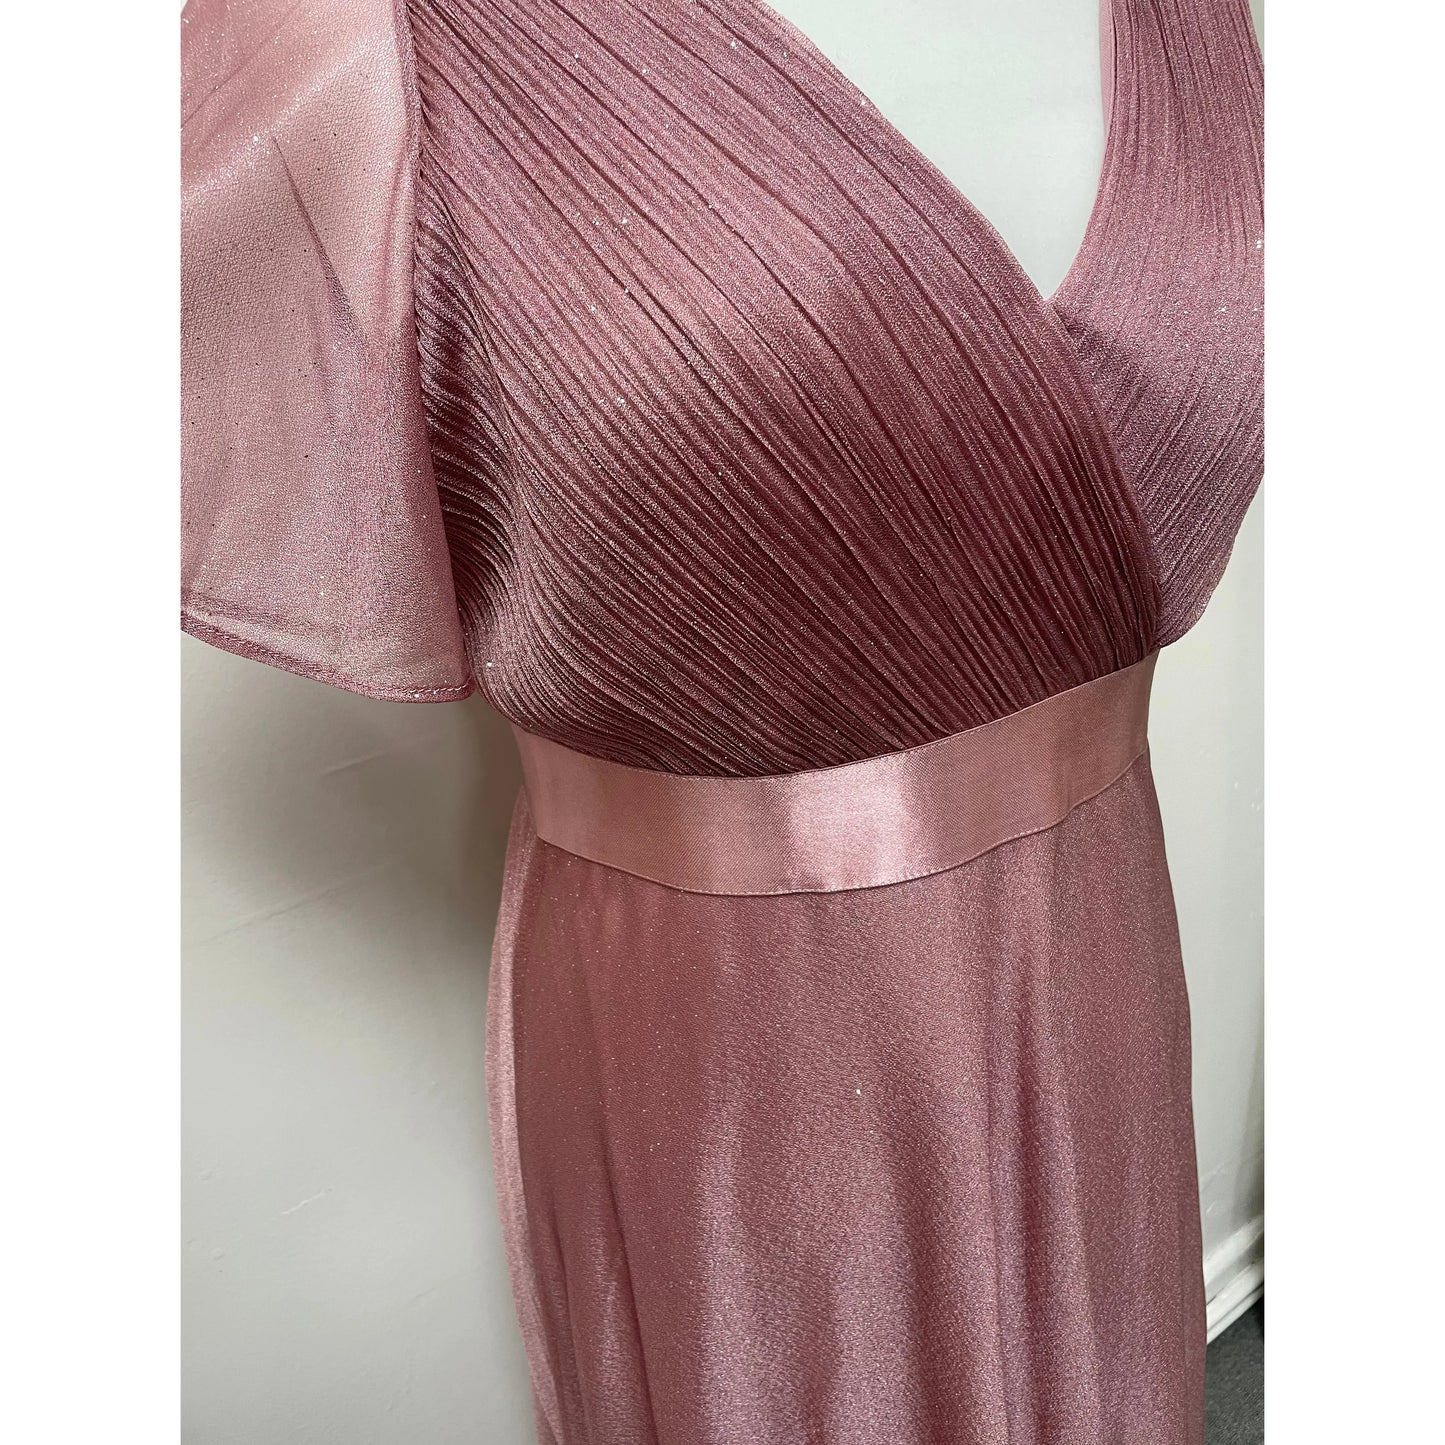 Ava Bridesmaid Dress - Deep Pink with Glitter